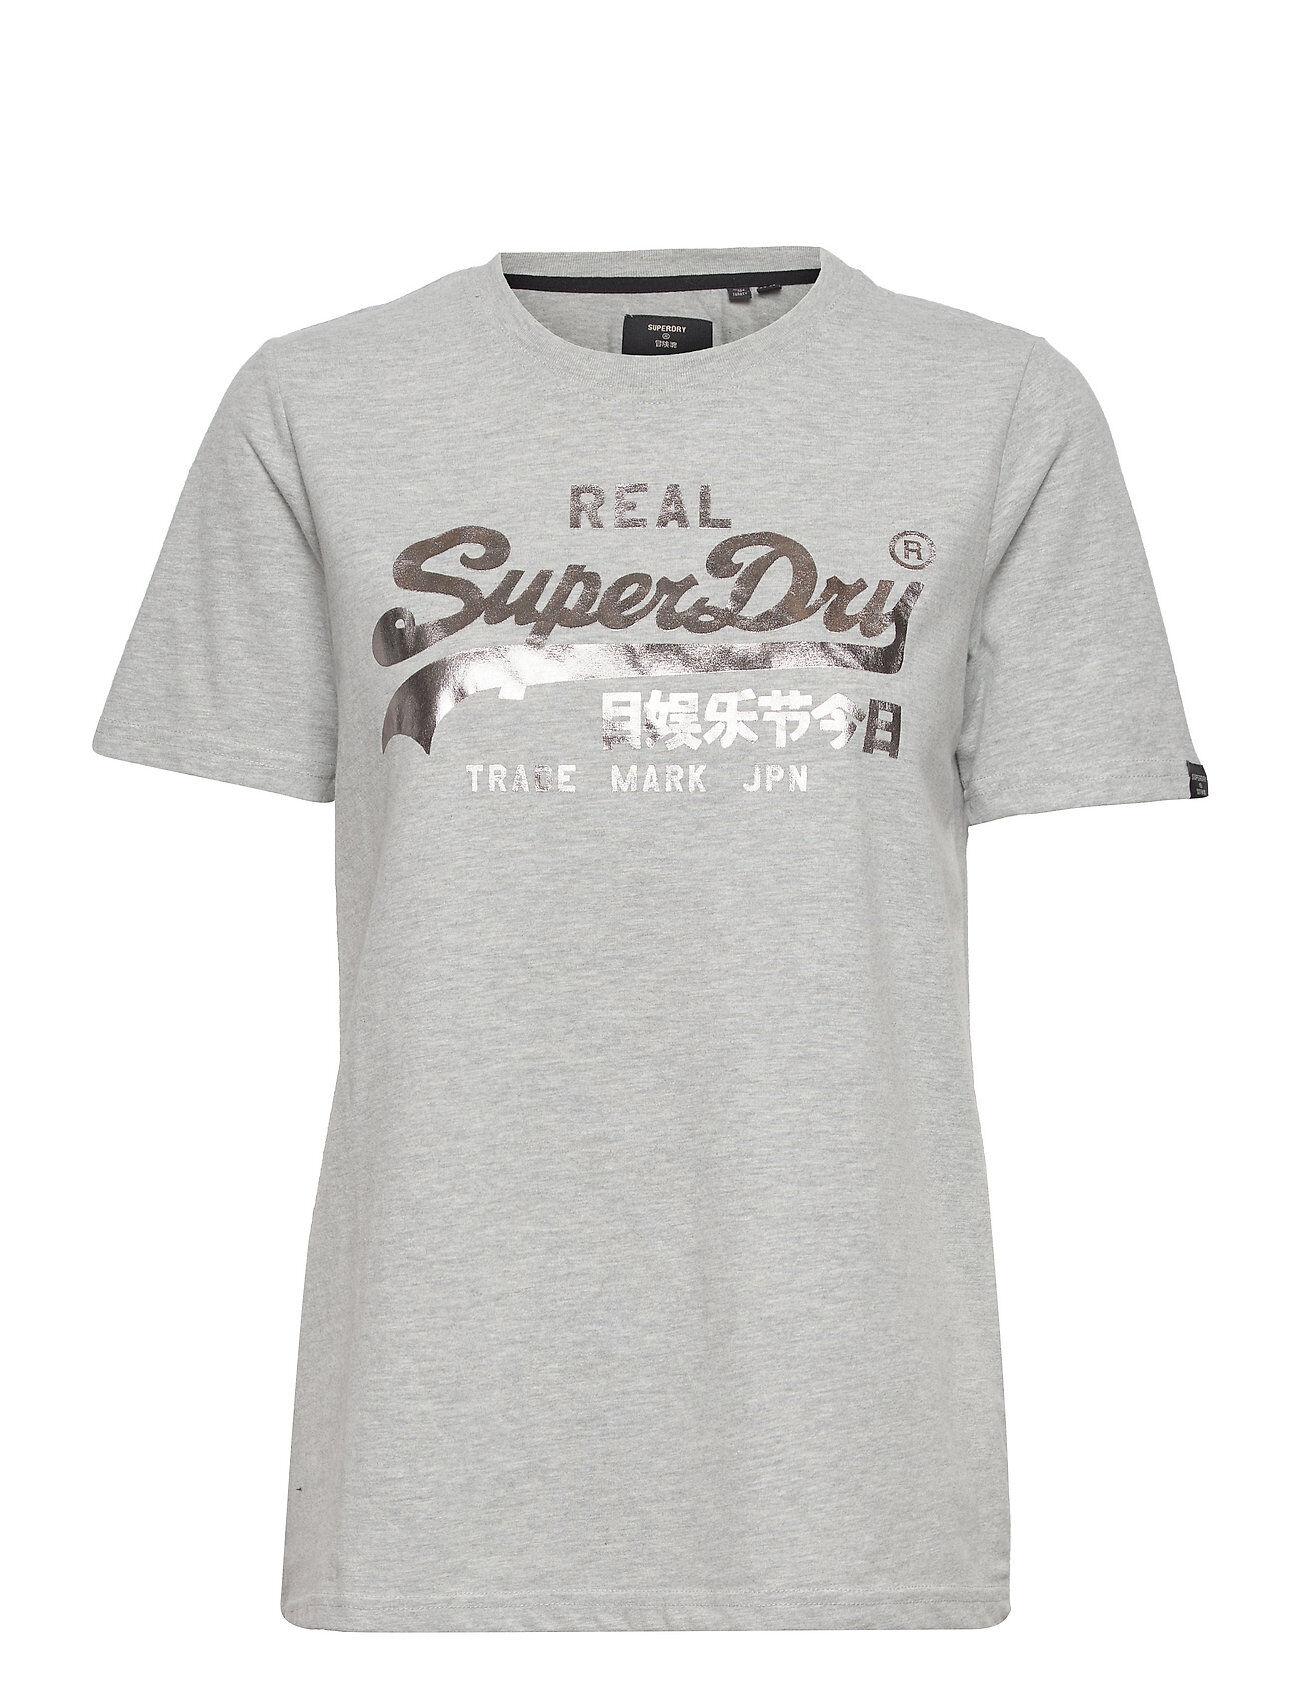 Superdry Vl Boho Sparkle Tee T-shirts & Tops Short-sleeved Grå Superdry